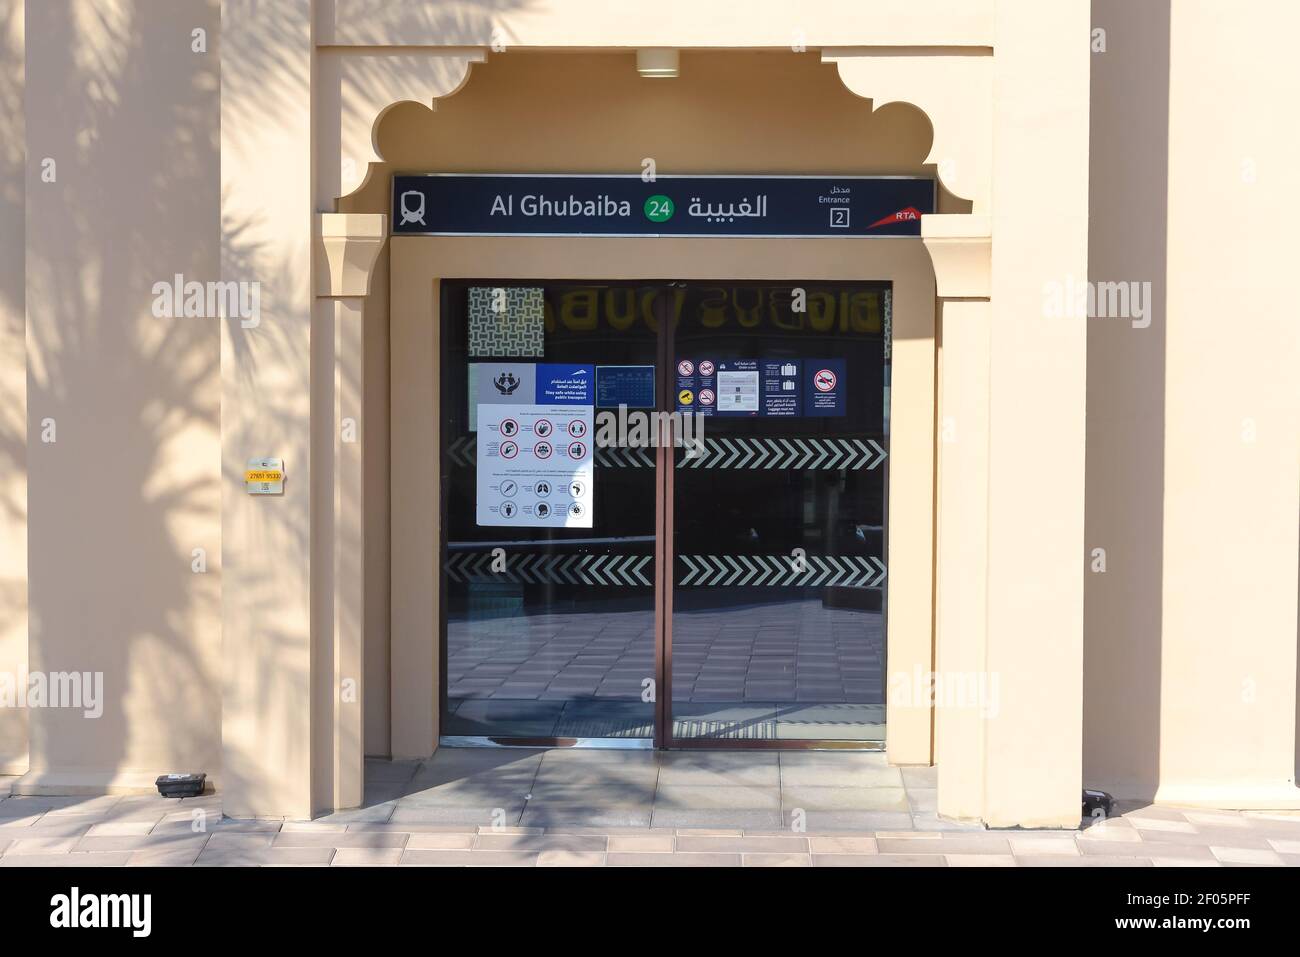 Al Ghubaiba Metro Station entrance in Dubai Creek. Public transport sign in Dubai in english and arabic. RTA Metro Station. Stock Photo